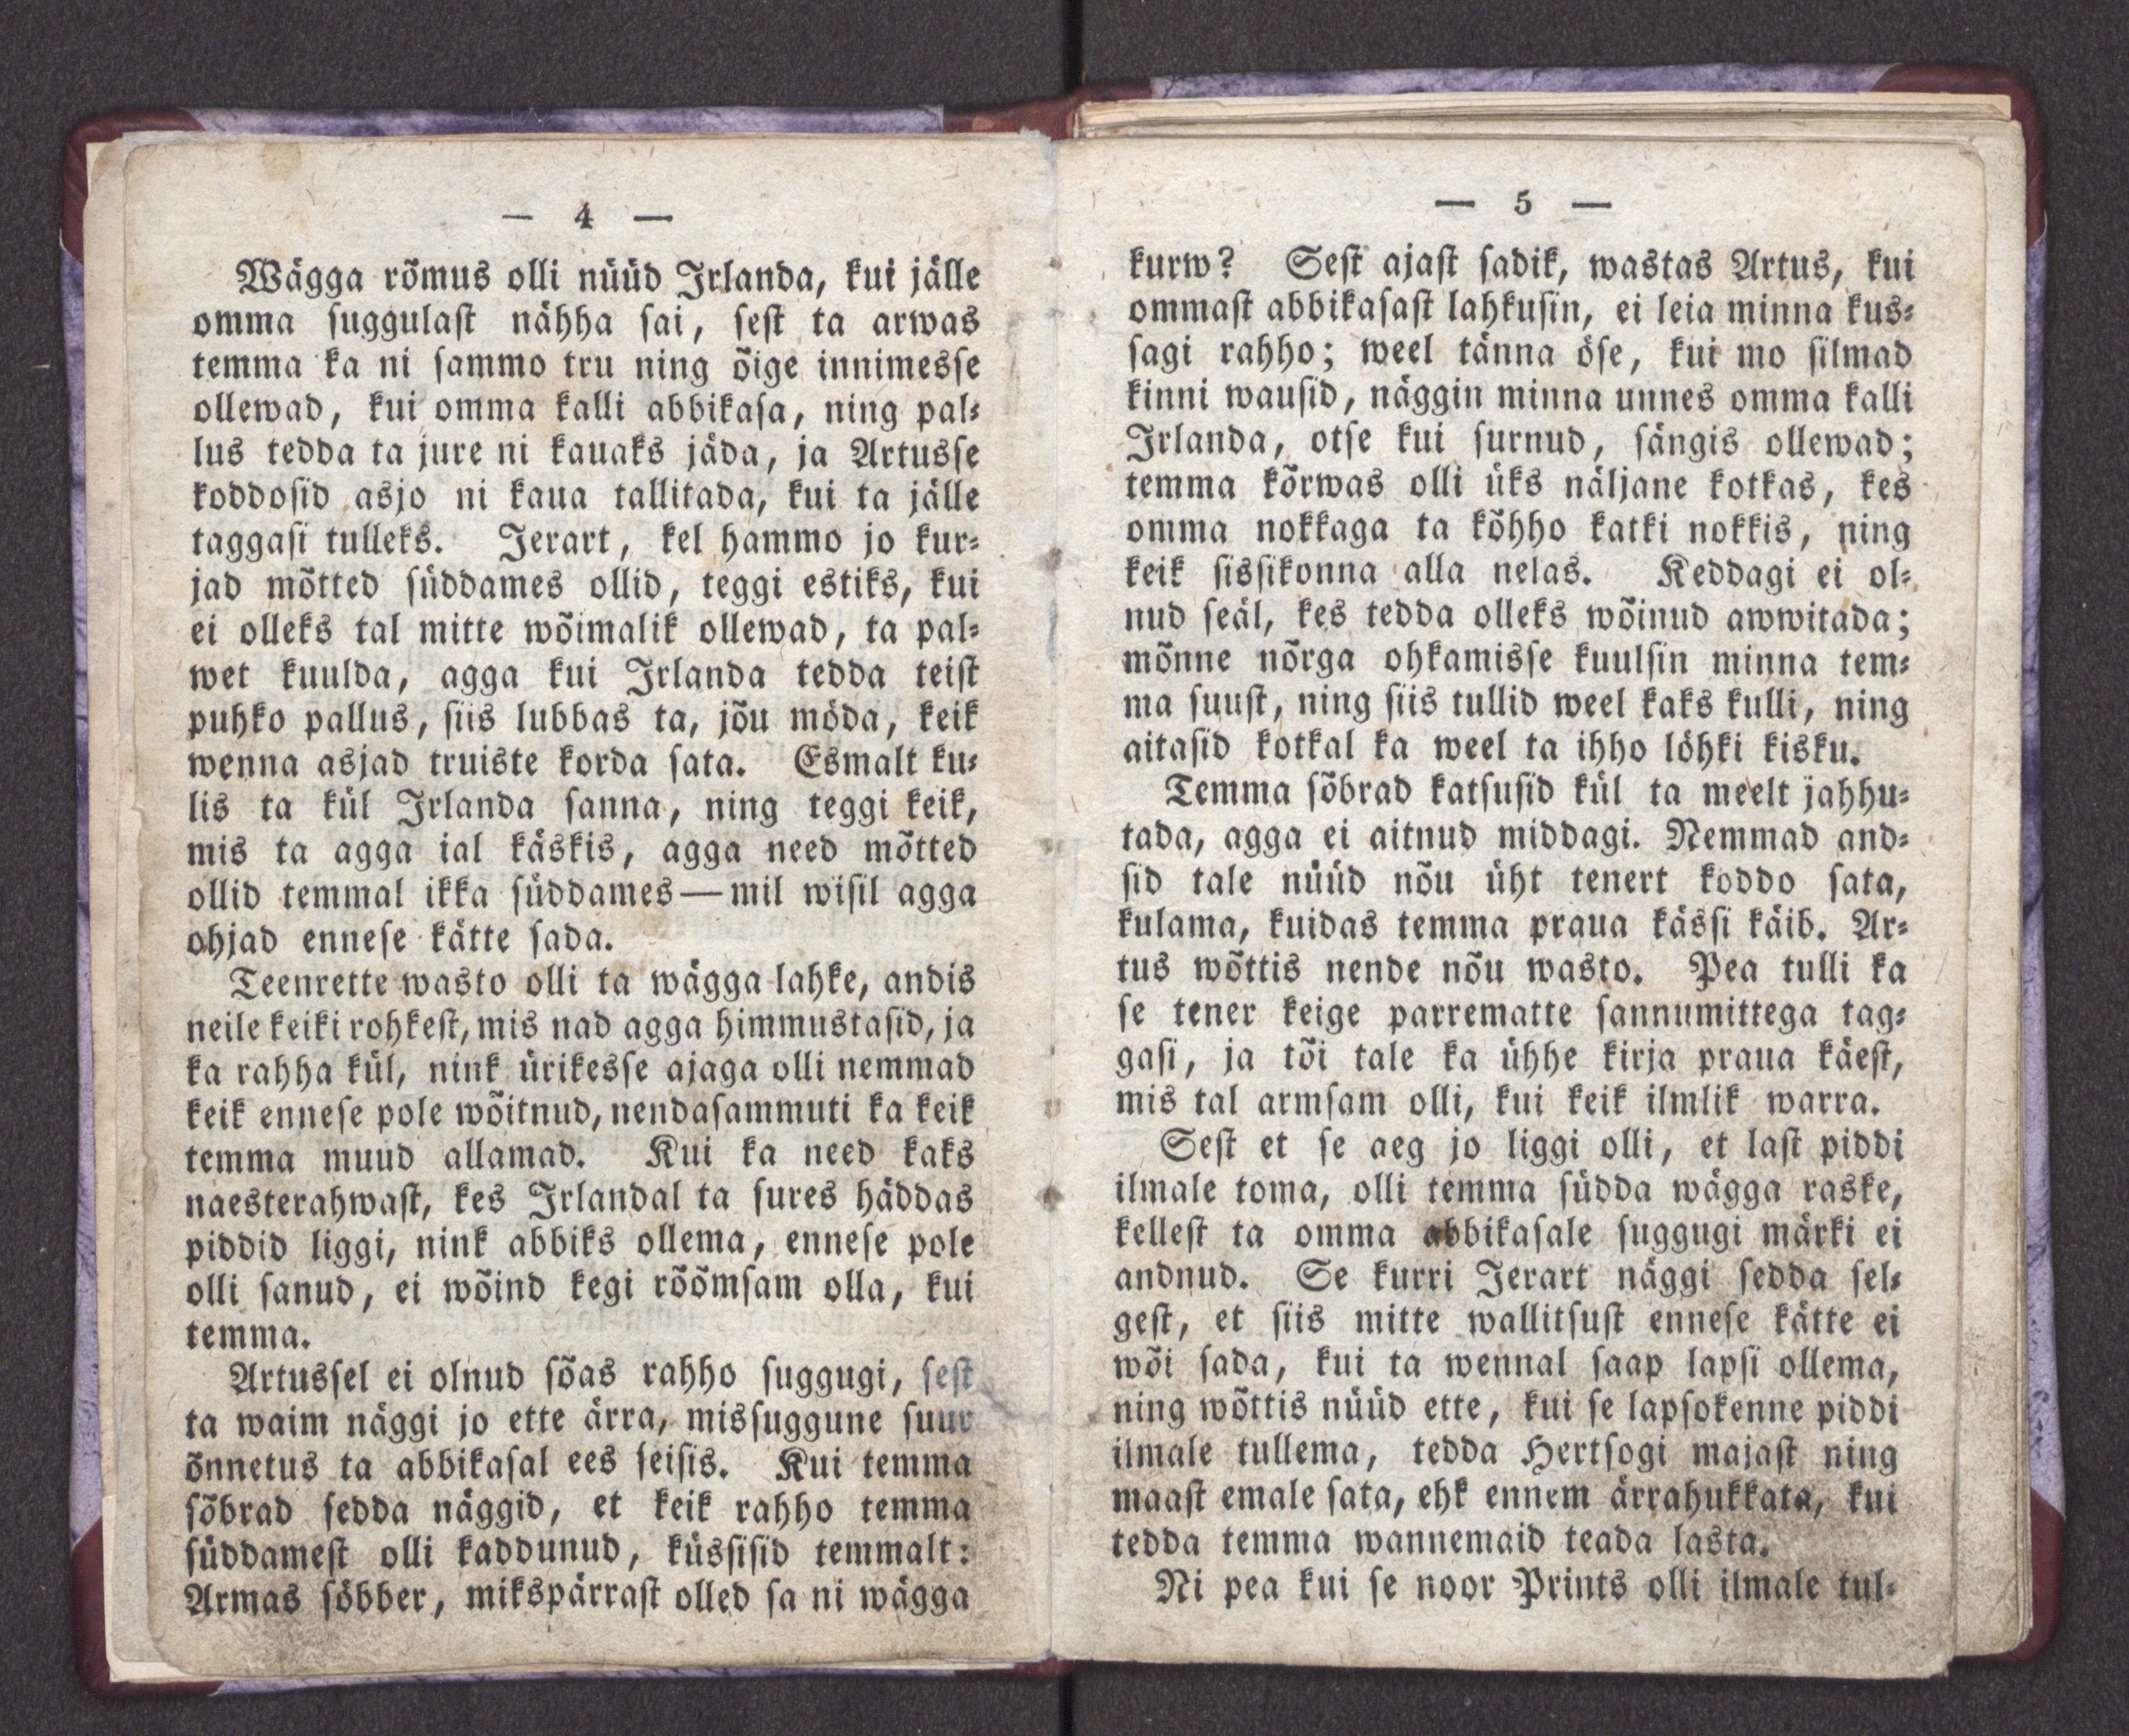 Irlanda, ehk puhta ello wõit (1844) | 3. (4-5) Main body of text